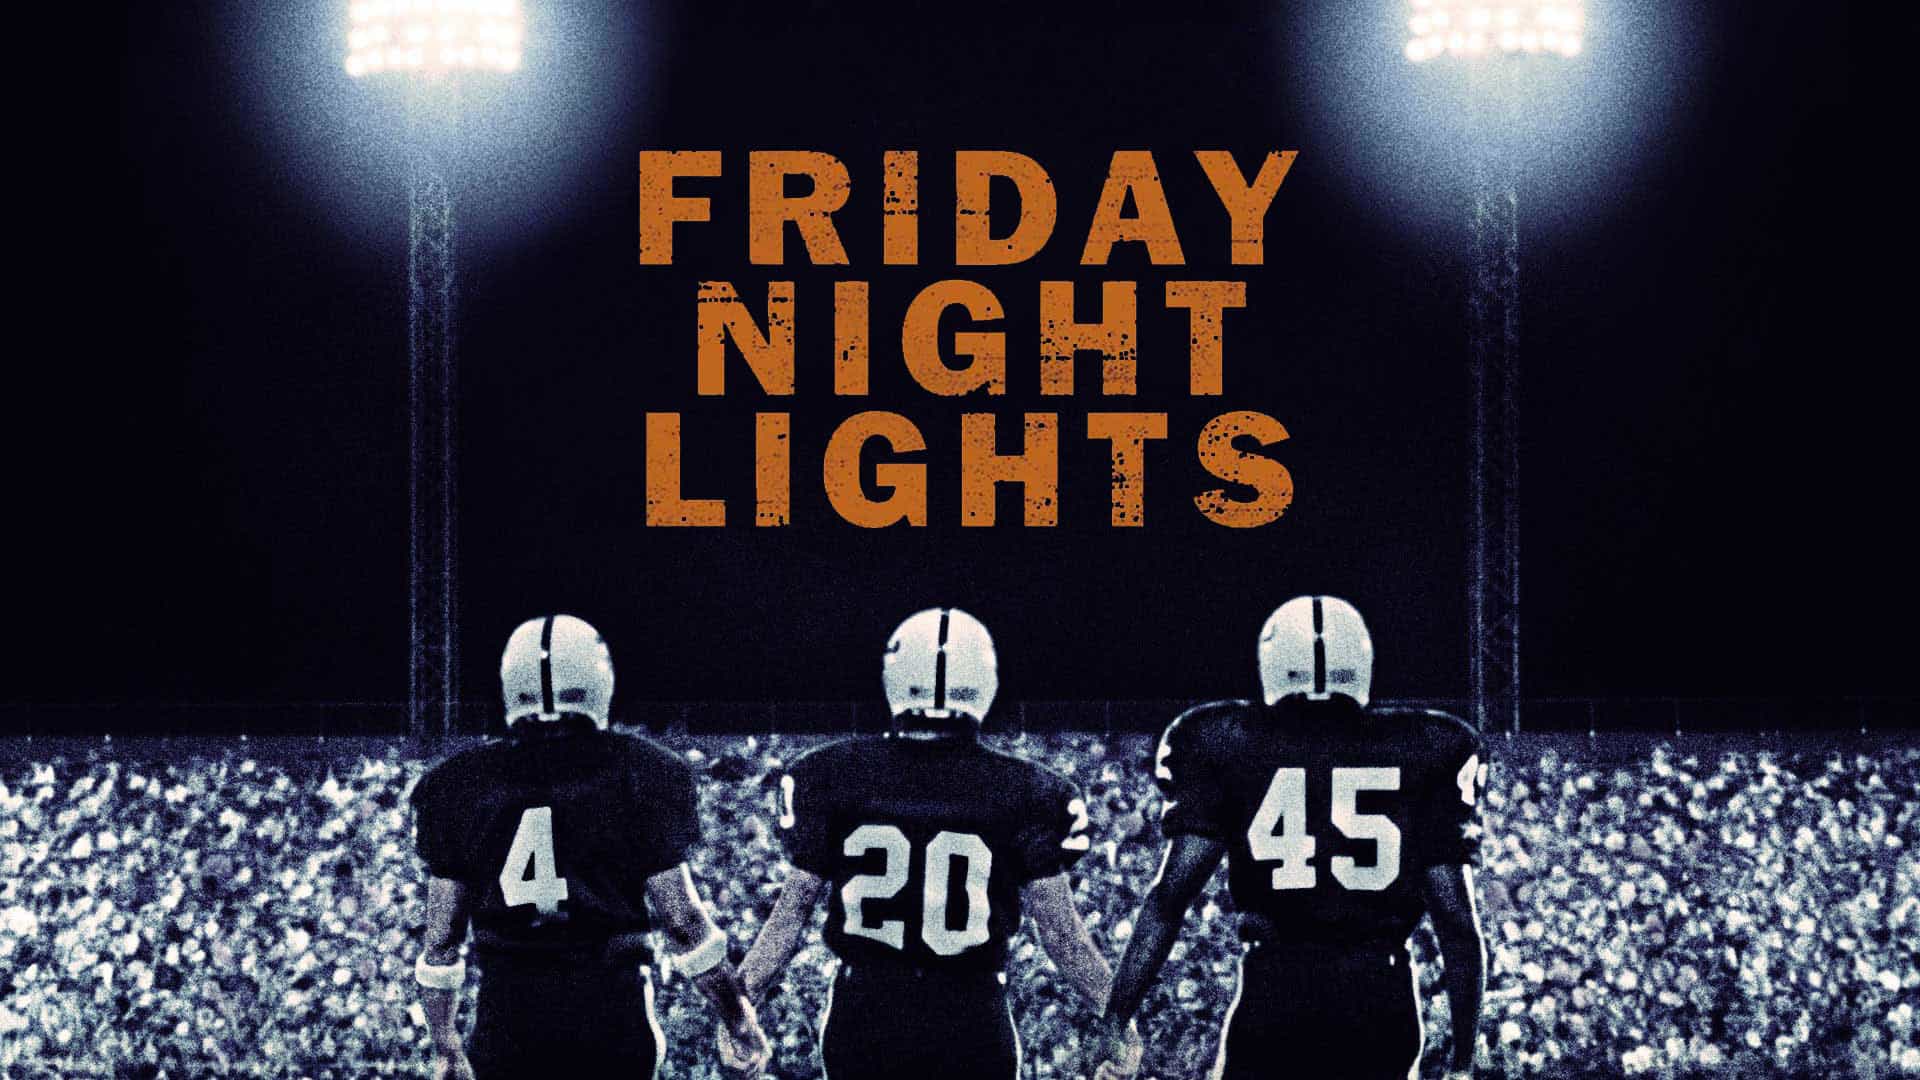 Friday Night Lights Official Trailer #1 - Billy Bob Thornton Movie (2004)  HD 